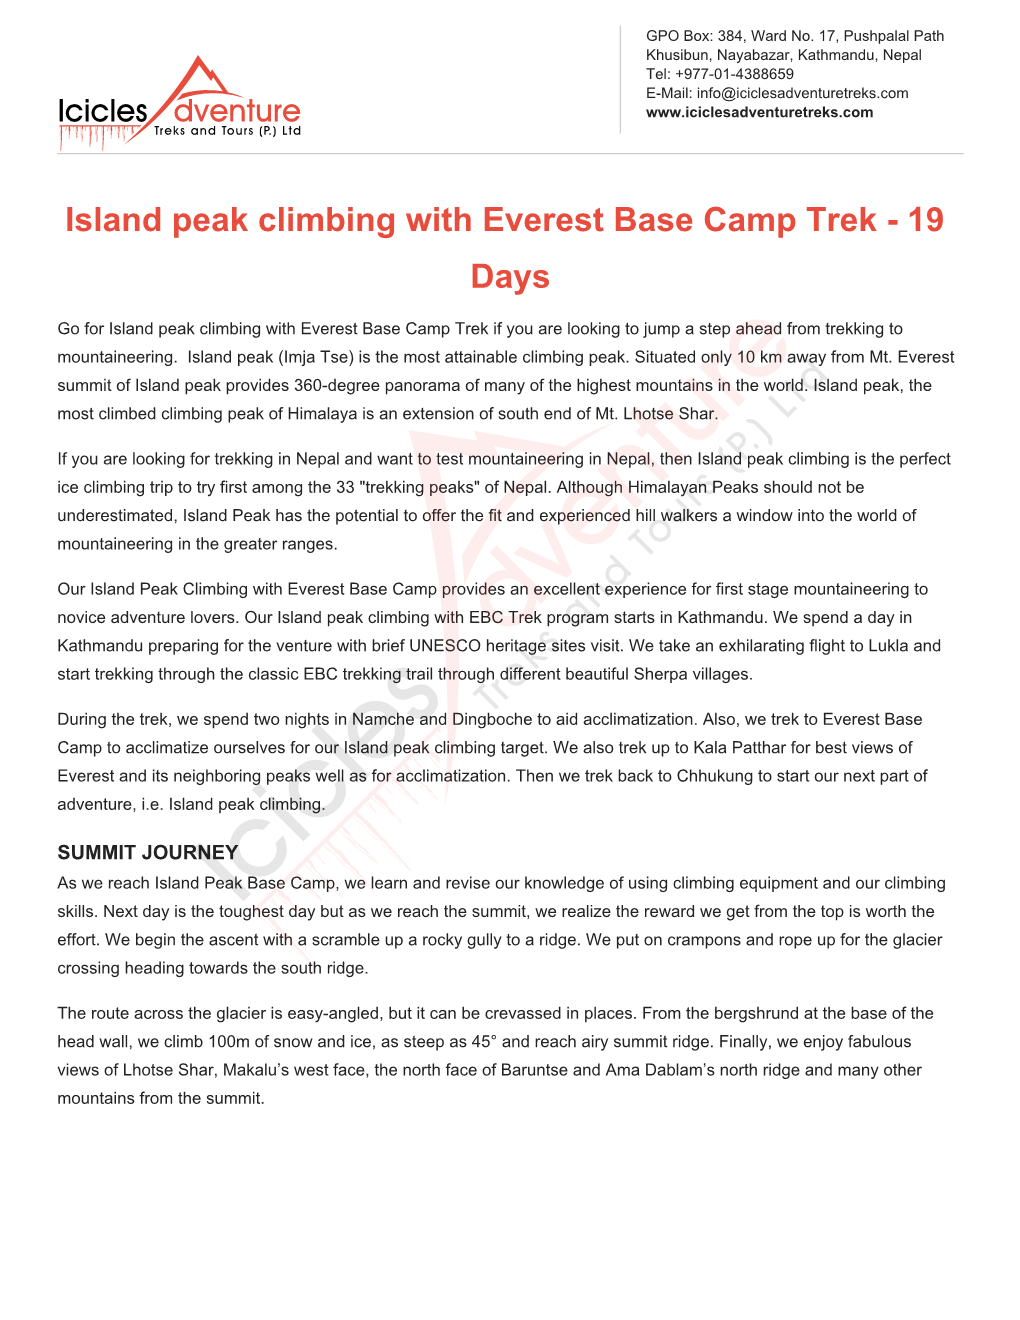 Island Peak Climbing with Everest Base Camp Trek - 19 Days